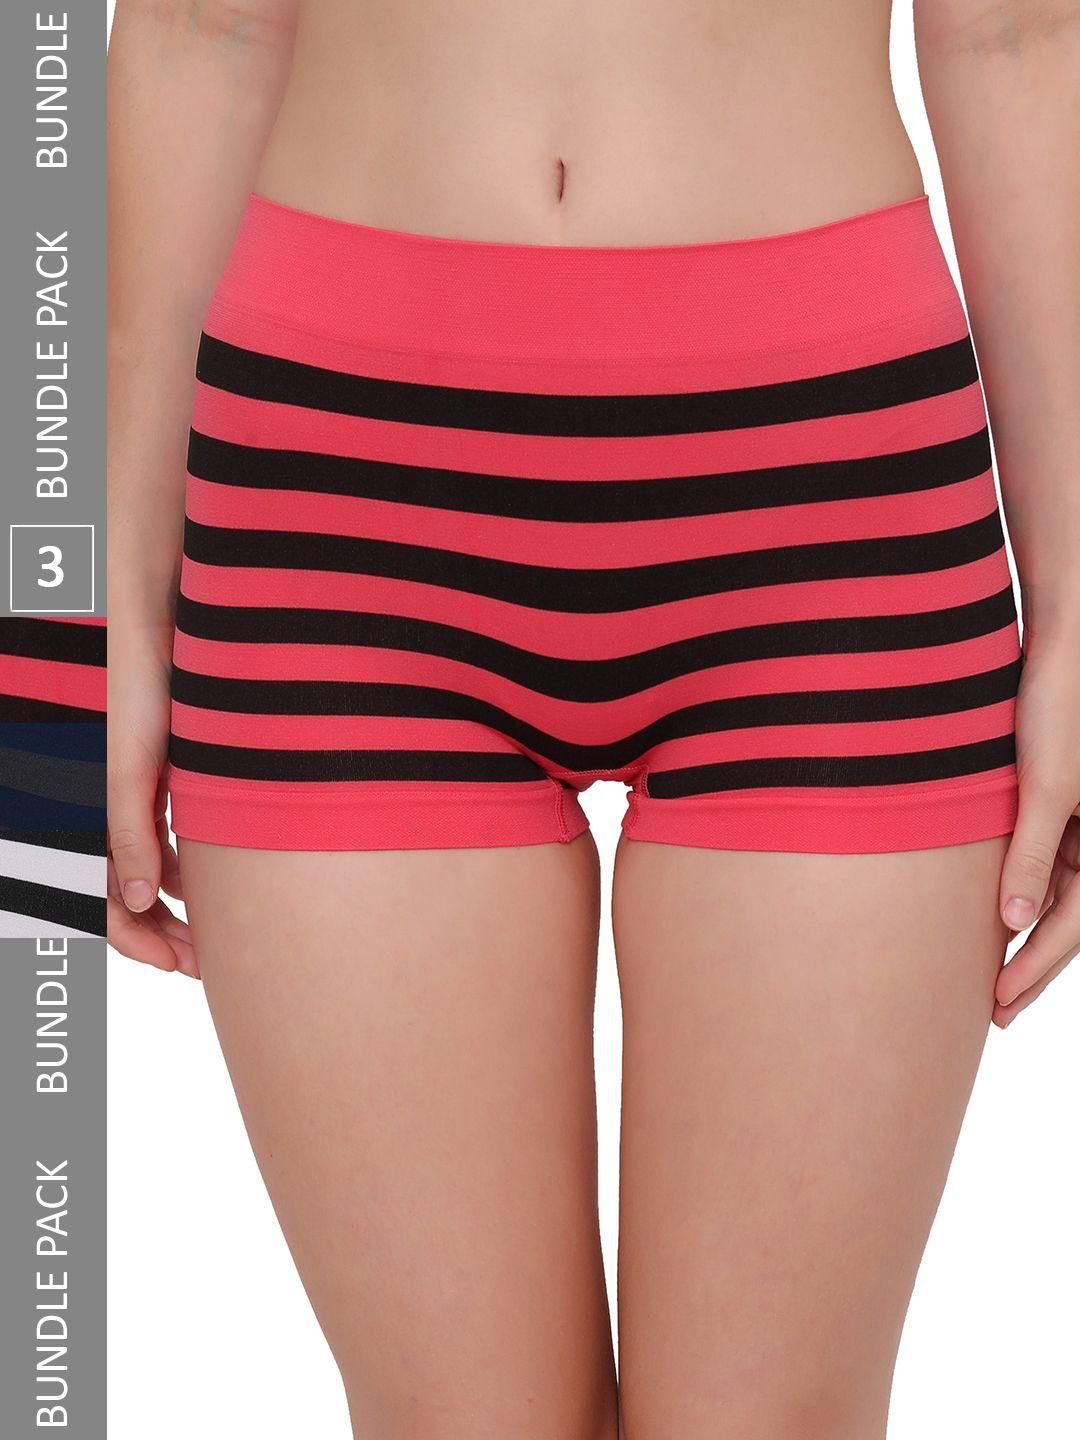 plumbury women pack of 3 striped seamless anti microbial boy shorts briefs